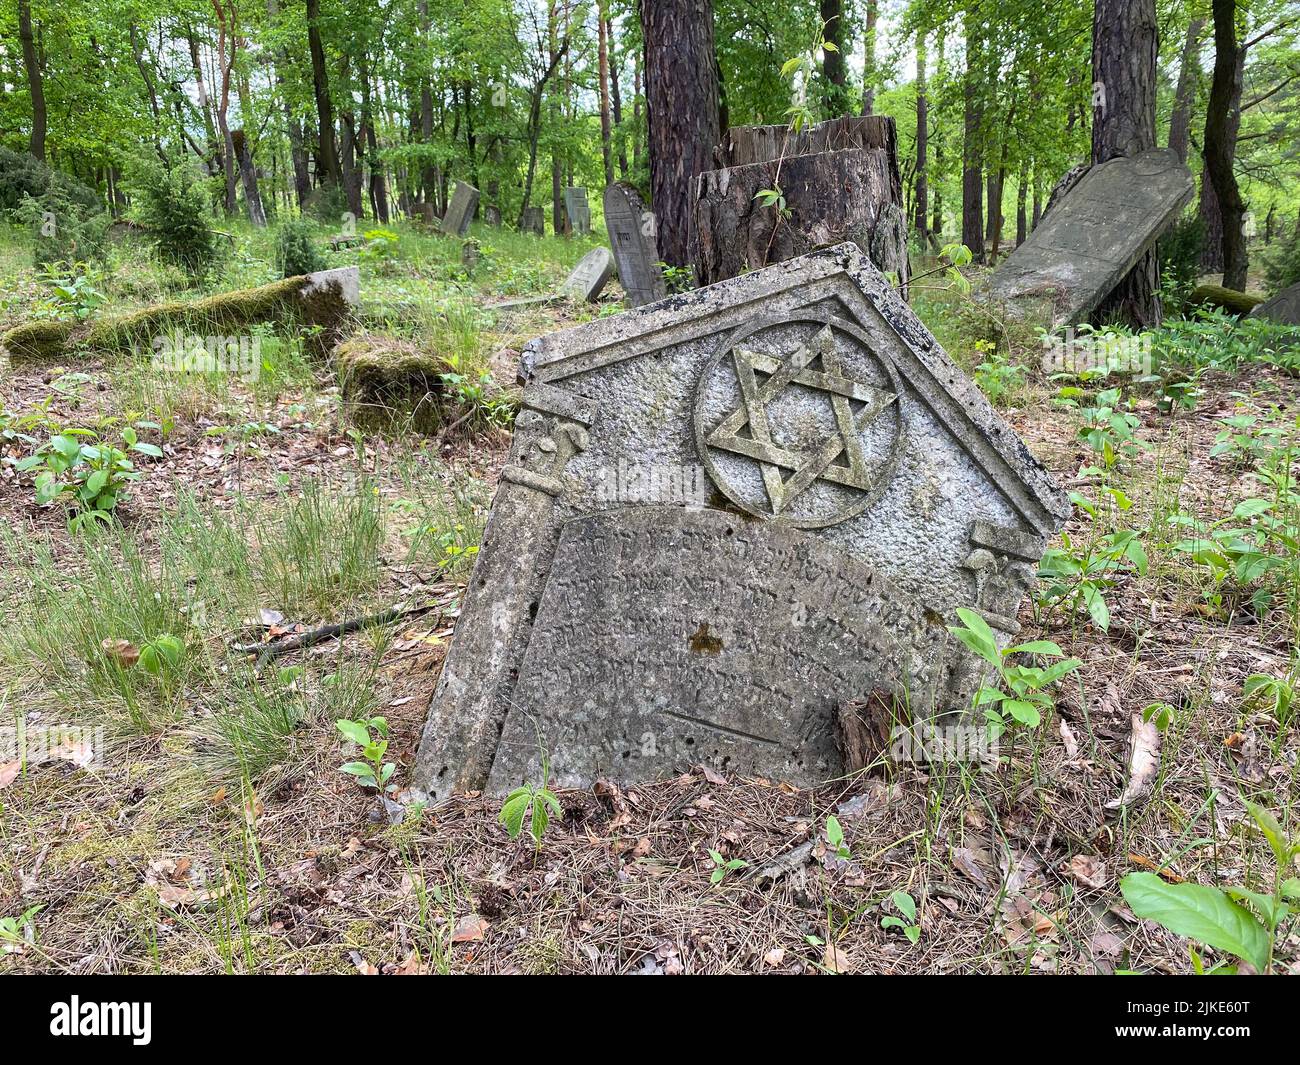 Ruins of the old Jewish cemetery in Otwock Poland cmentarz żydowski w Otwock headstones jewish graveyard jewish graveside beit kvarot jewish tombstone Stock Photo